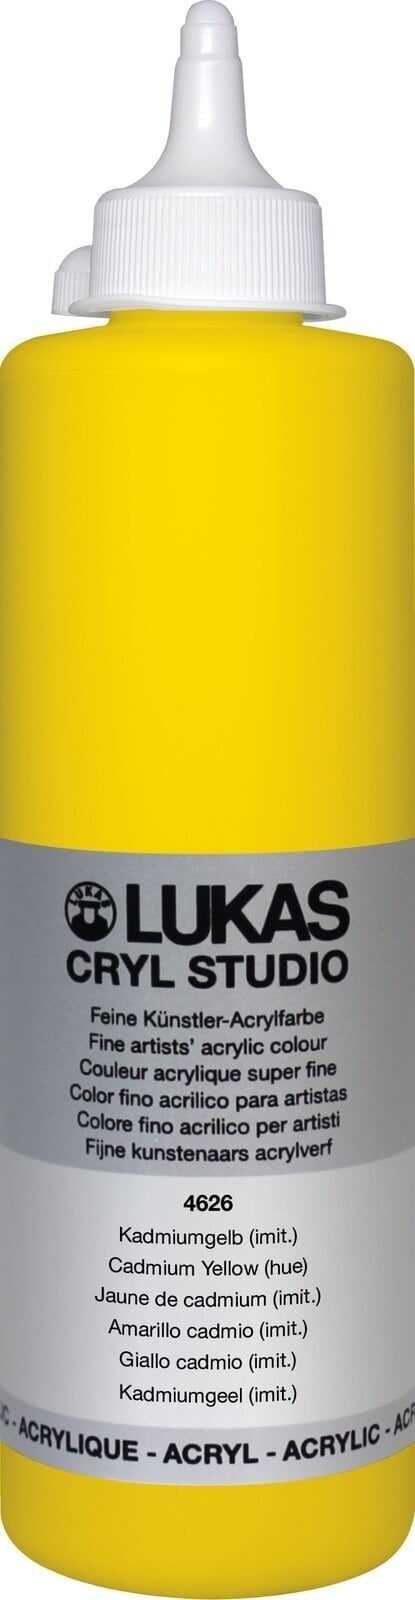 Acrylic Paint Lukas Cryl Studio Acrylic Paint 500 ml Cadmium Yellow Hue